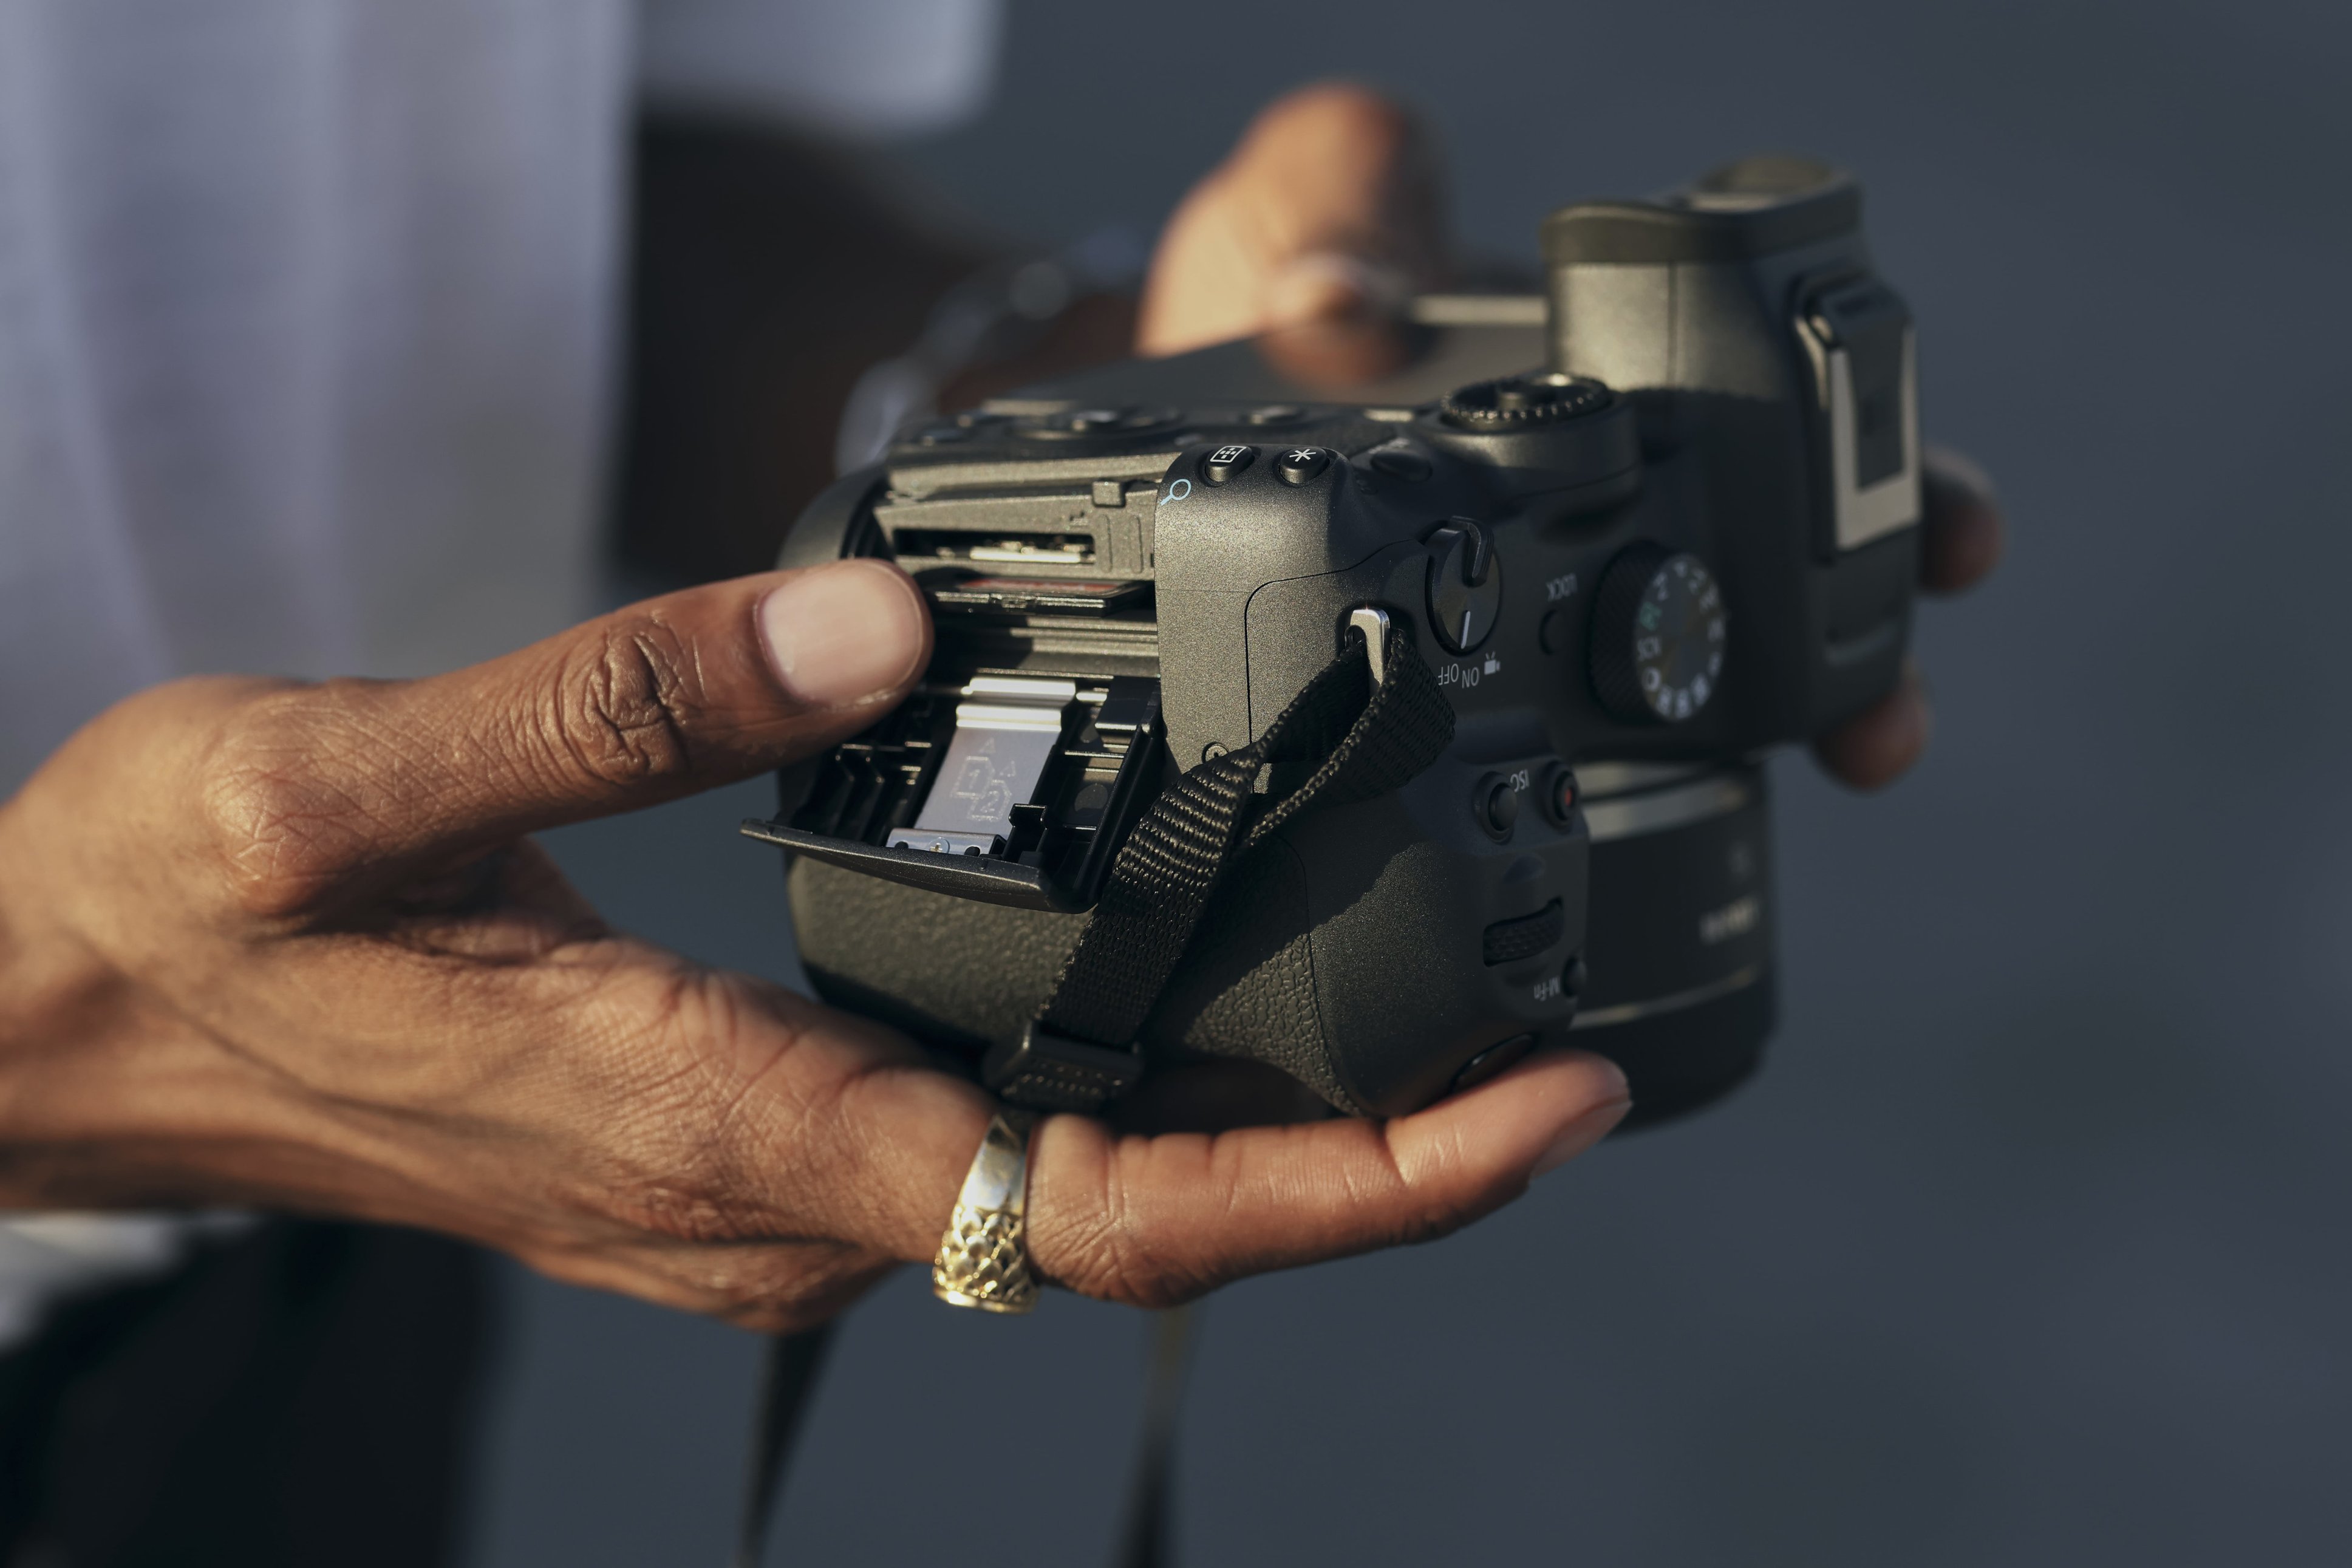 Canon EOS R7 Mirrorless Camera in Black